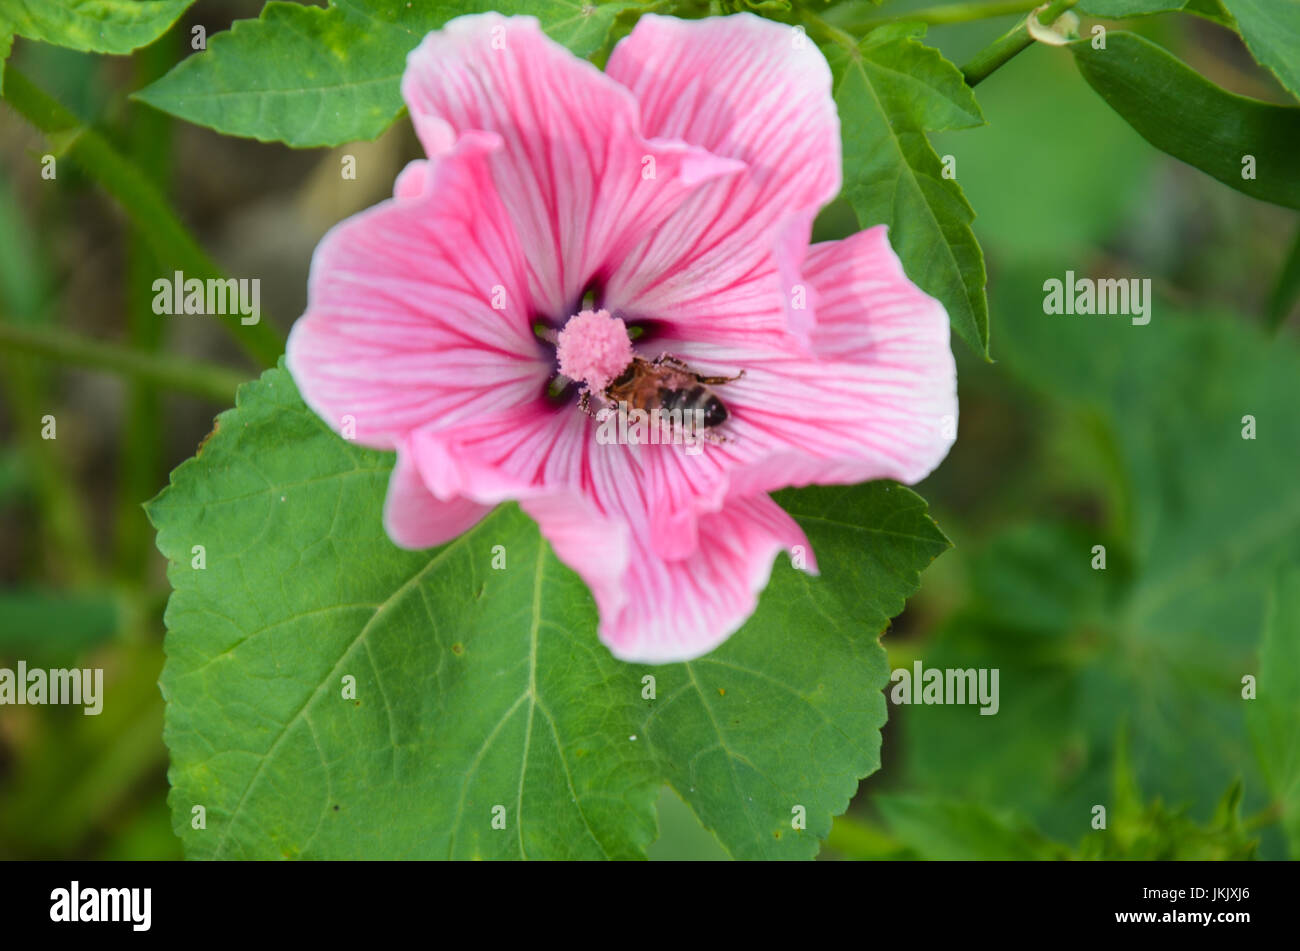 big beautiful pink flower Lavatera closeup on the blurry background. Stock Photo